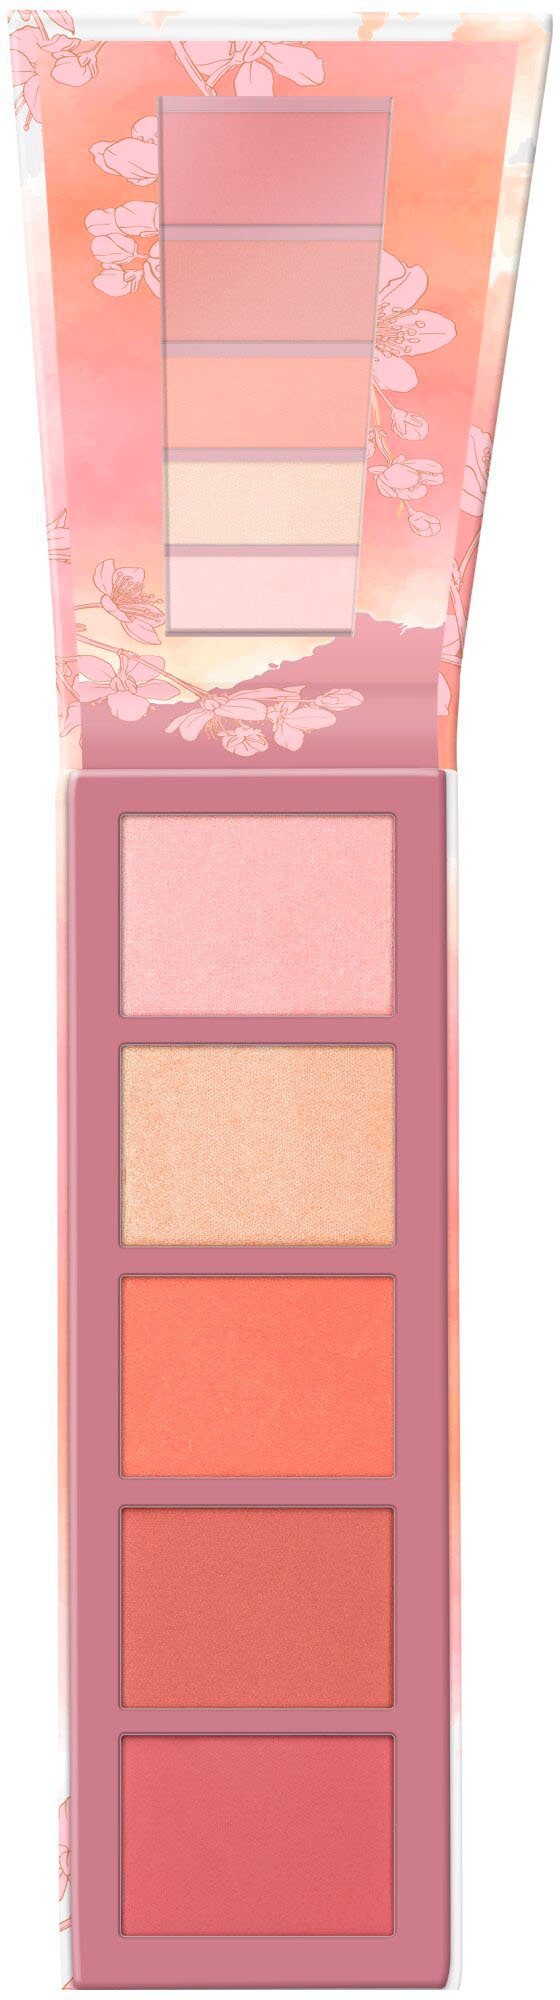 Essence Rouge-Palette peachy BLOSSOM blush & highlighter palette